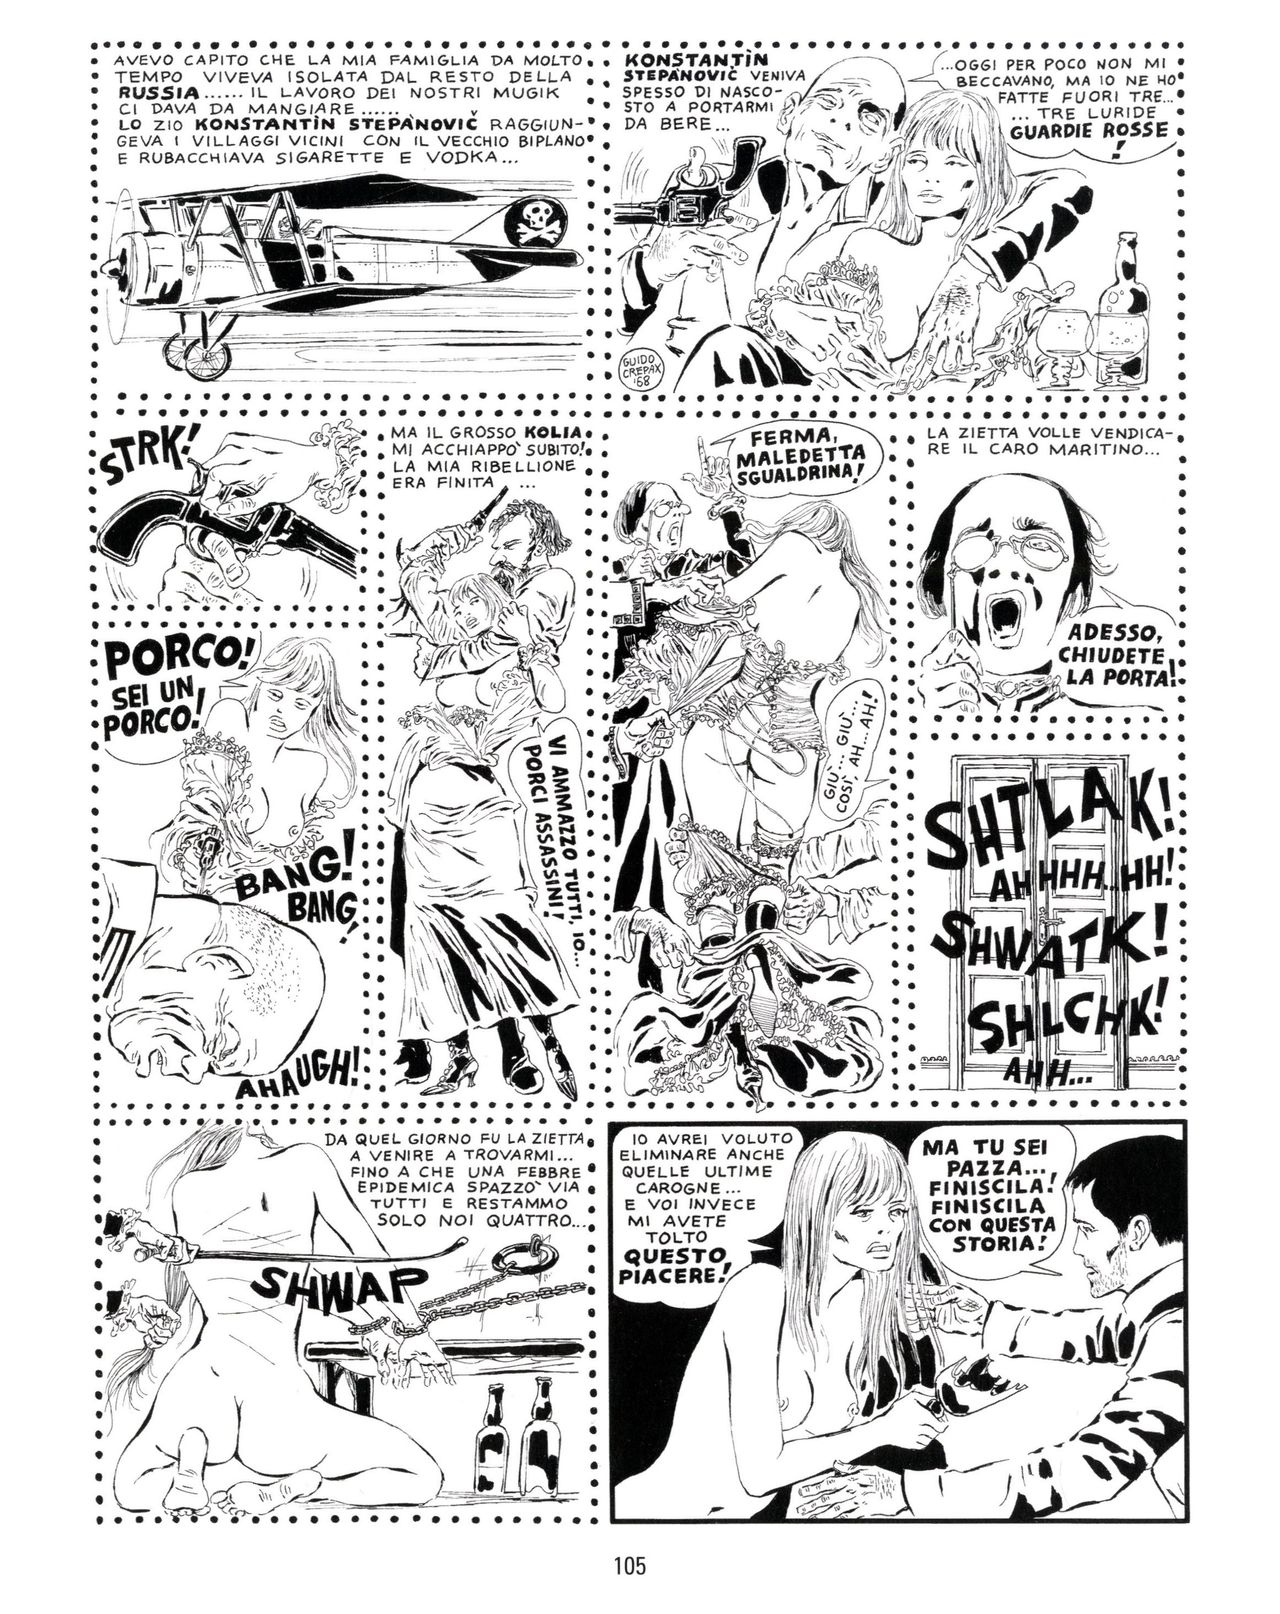 [Guido Crepax] Erotica Fumetti #25 : L'ascesa dei sotterranei : I cavalieri ciechi [Italian] 106